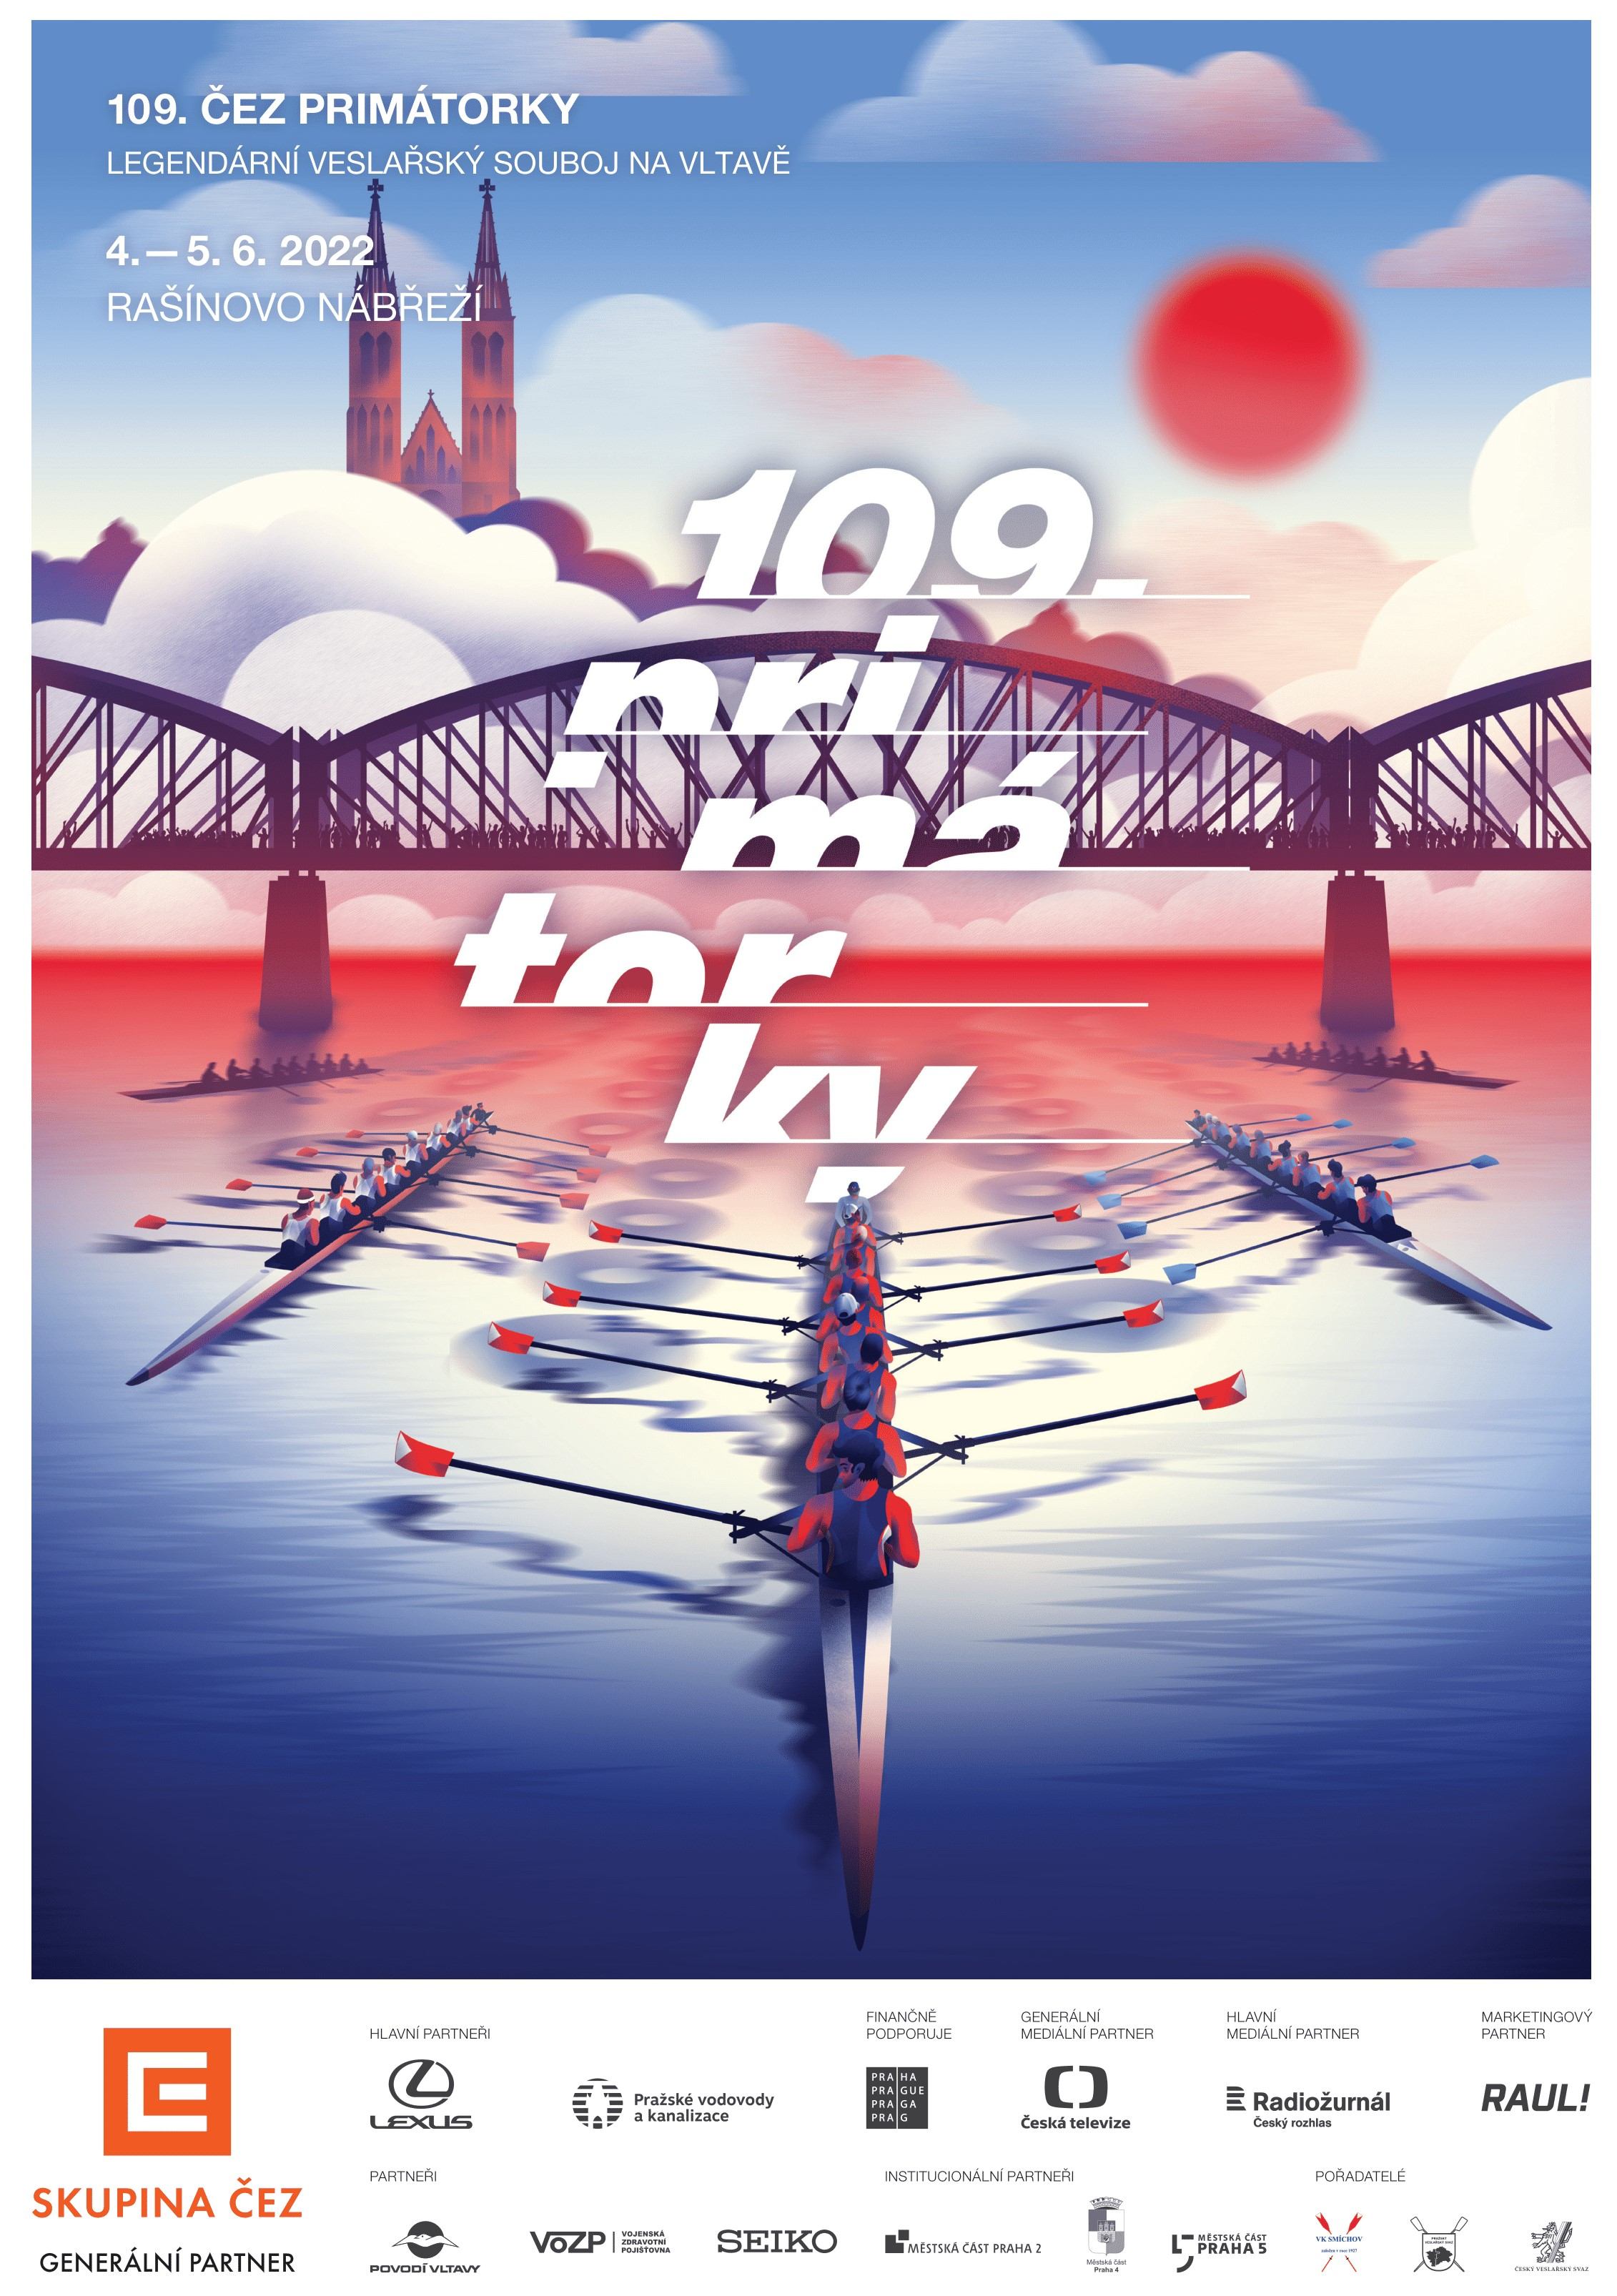 Tomski&Polanski, official visual for the Primátorky rowing race